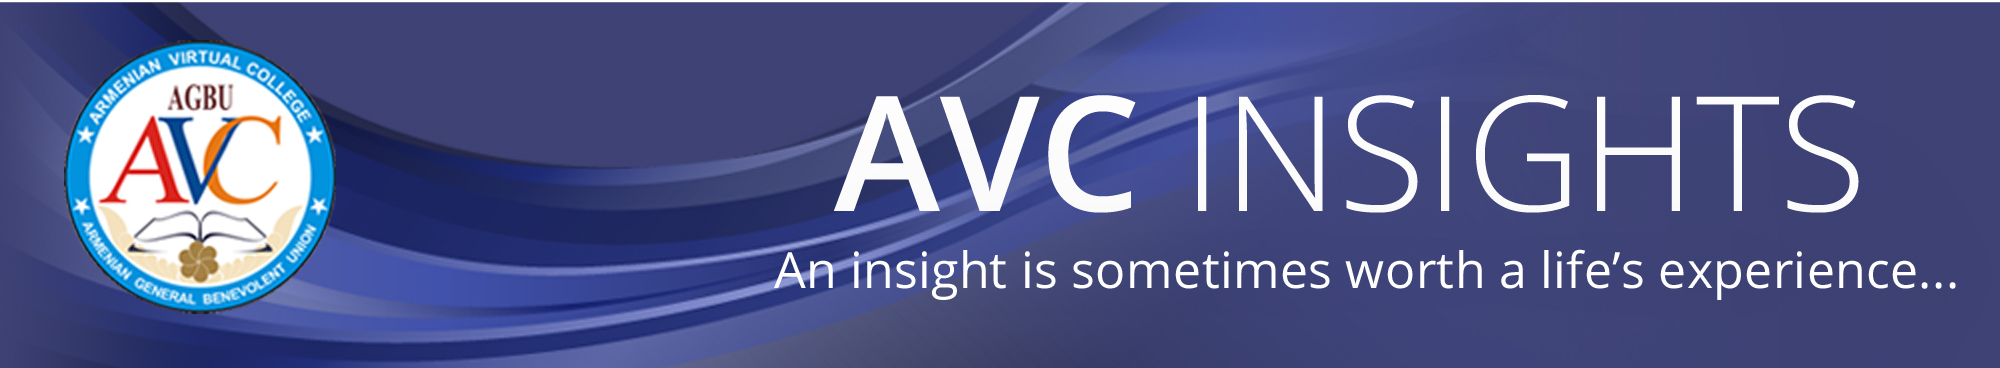 avc_insights